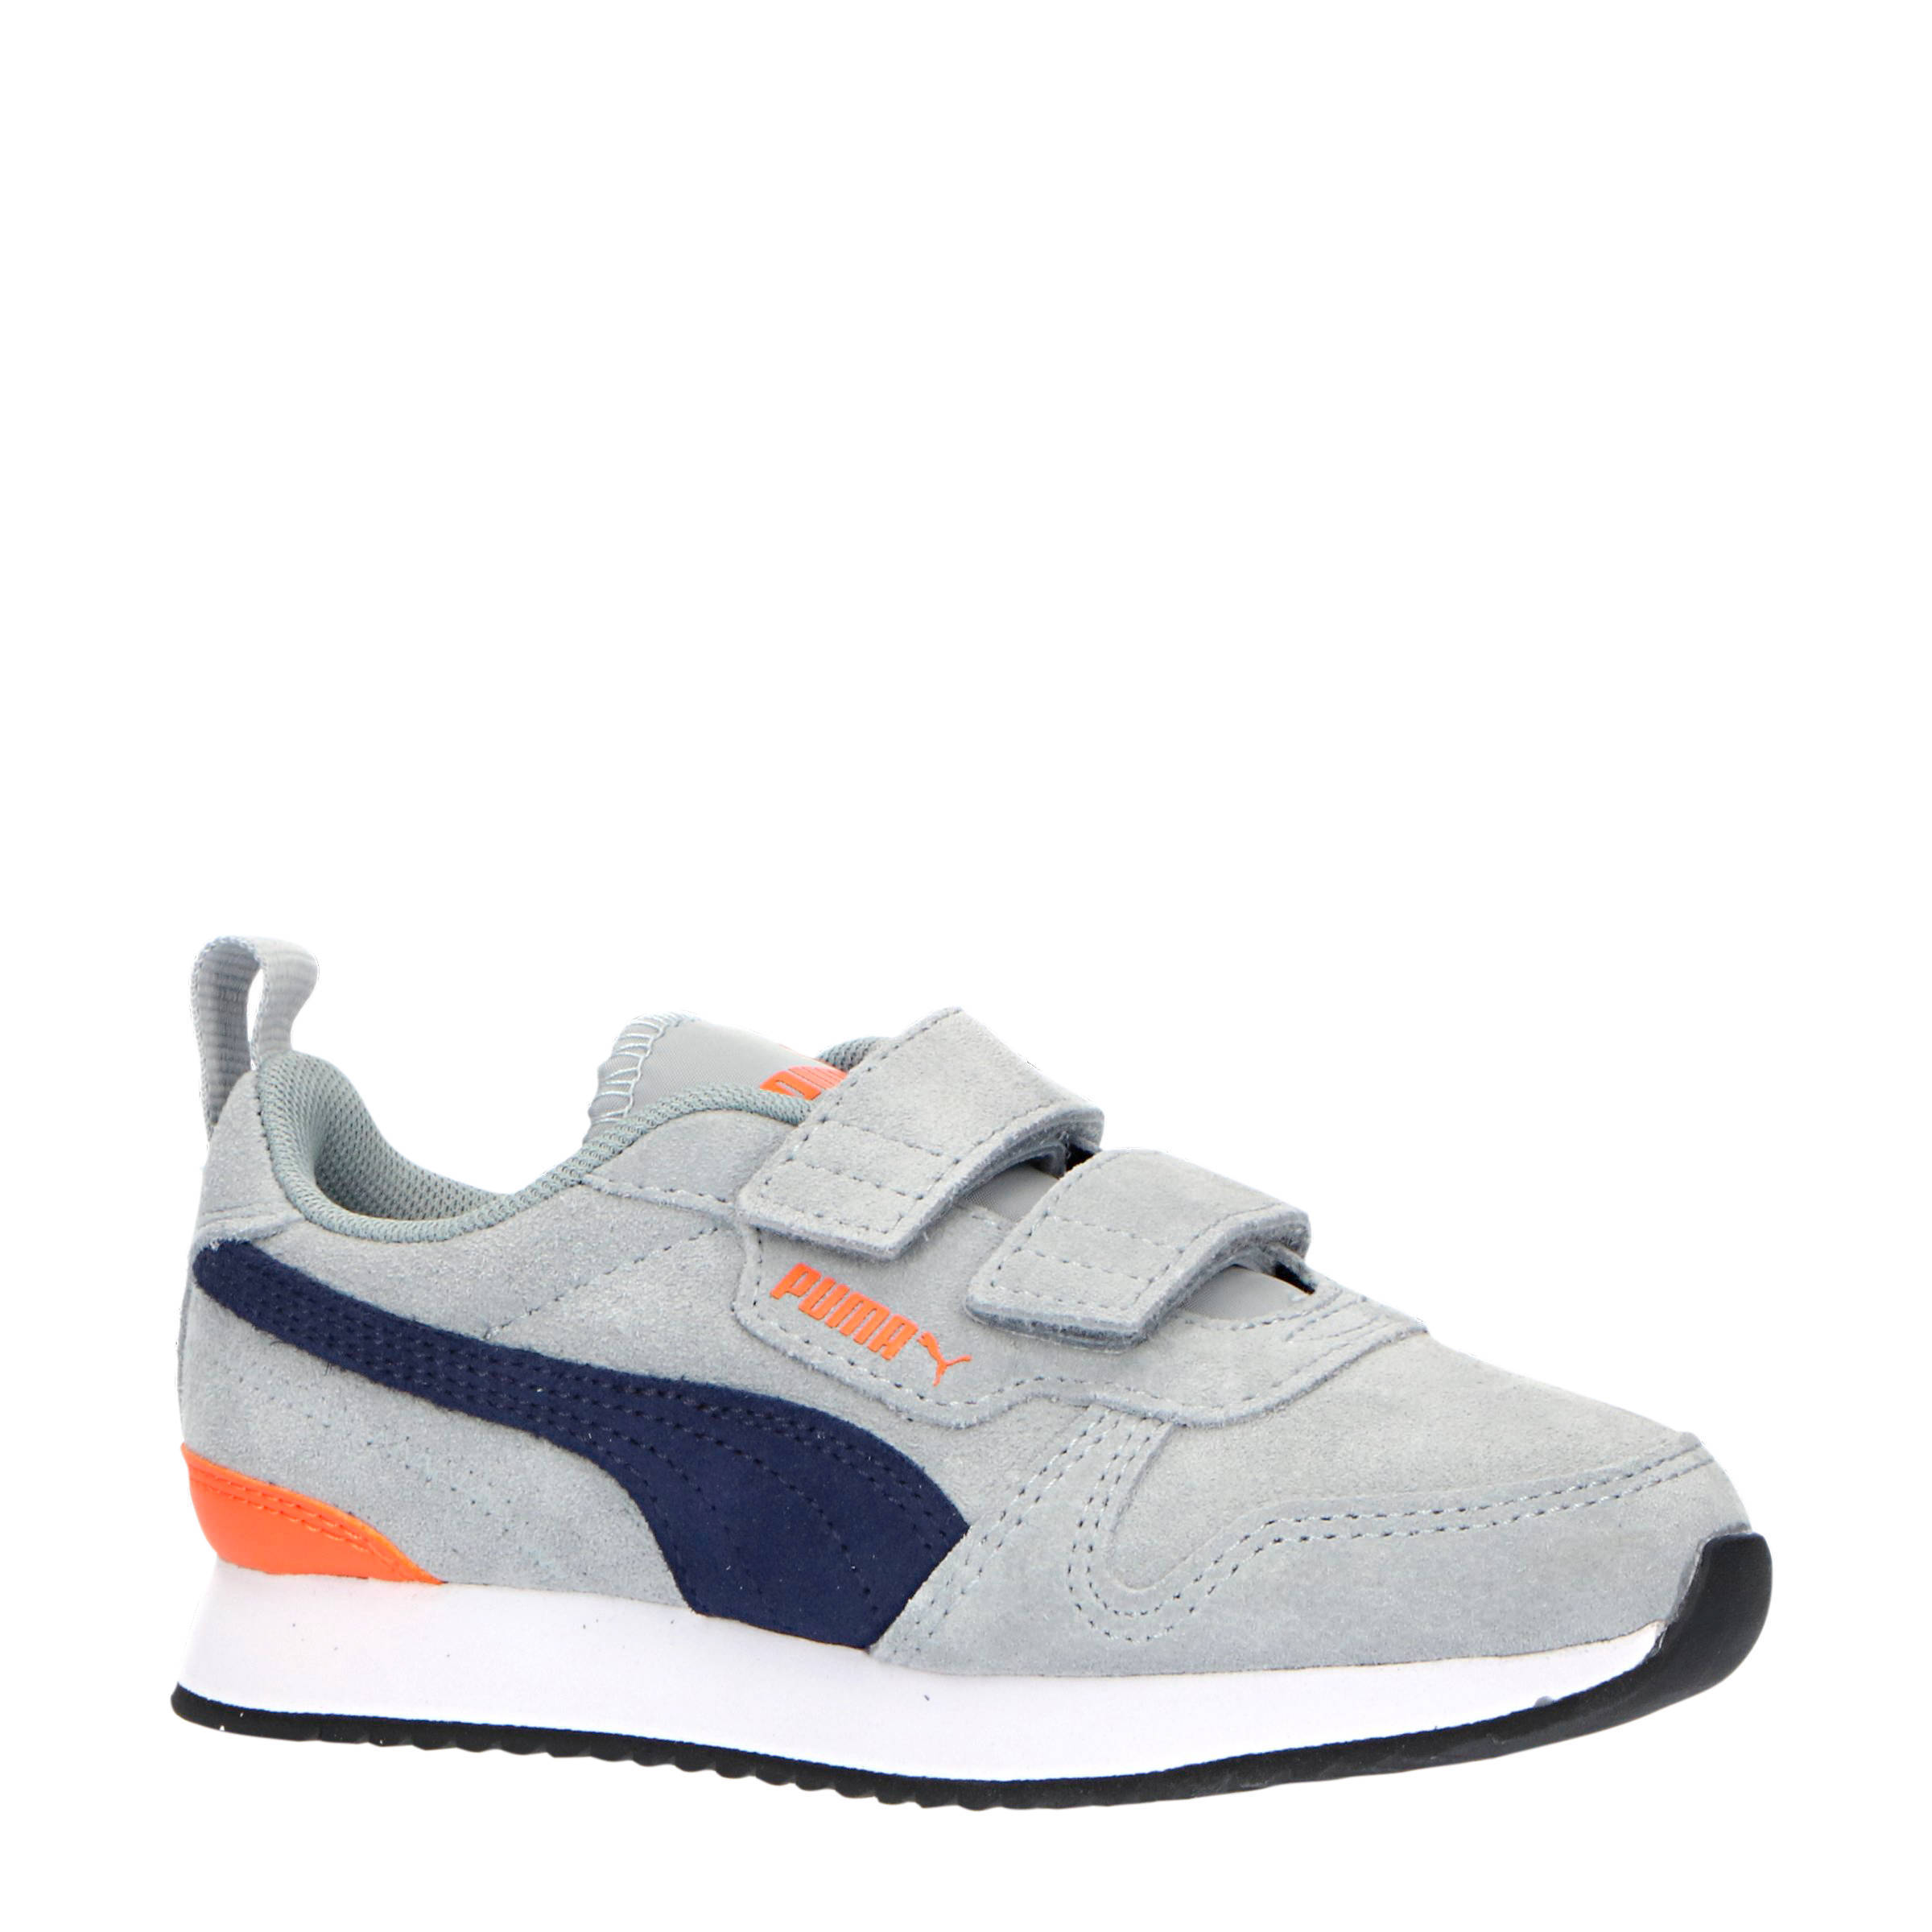 Puma R78 SD V PS sneakers grijs/donkerblauw/oranje online kopen